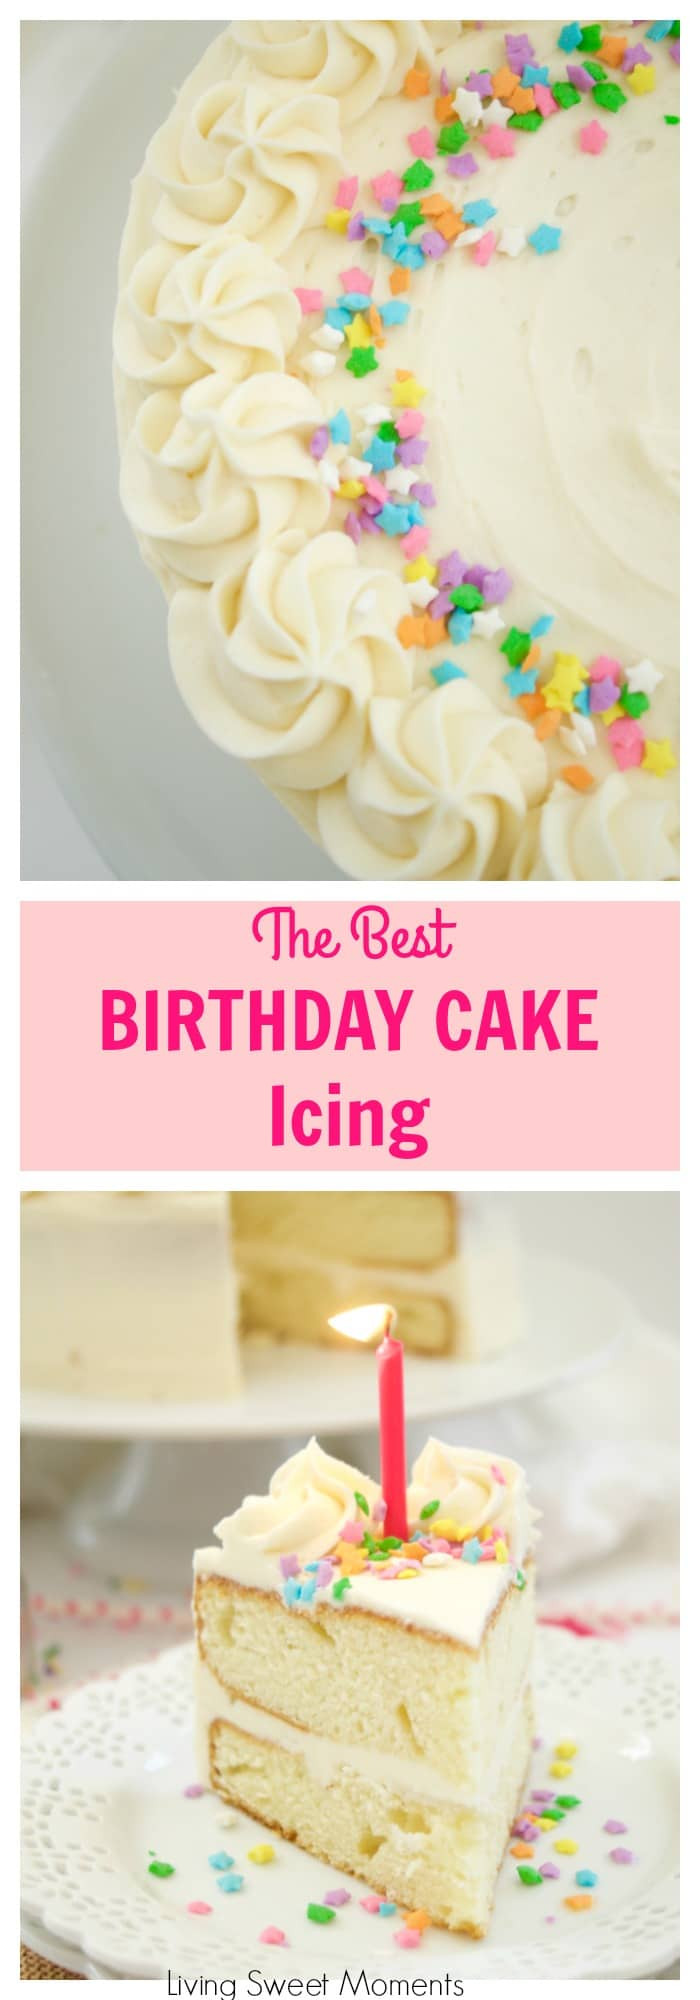 Birthday Cake Icing Recipe
 Birthday Cake Icing Recipe Living Sweet Moments